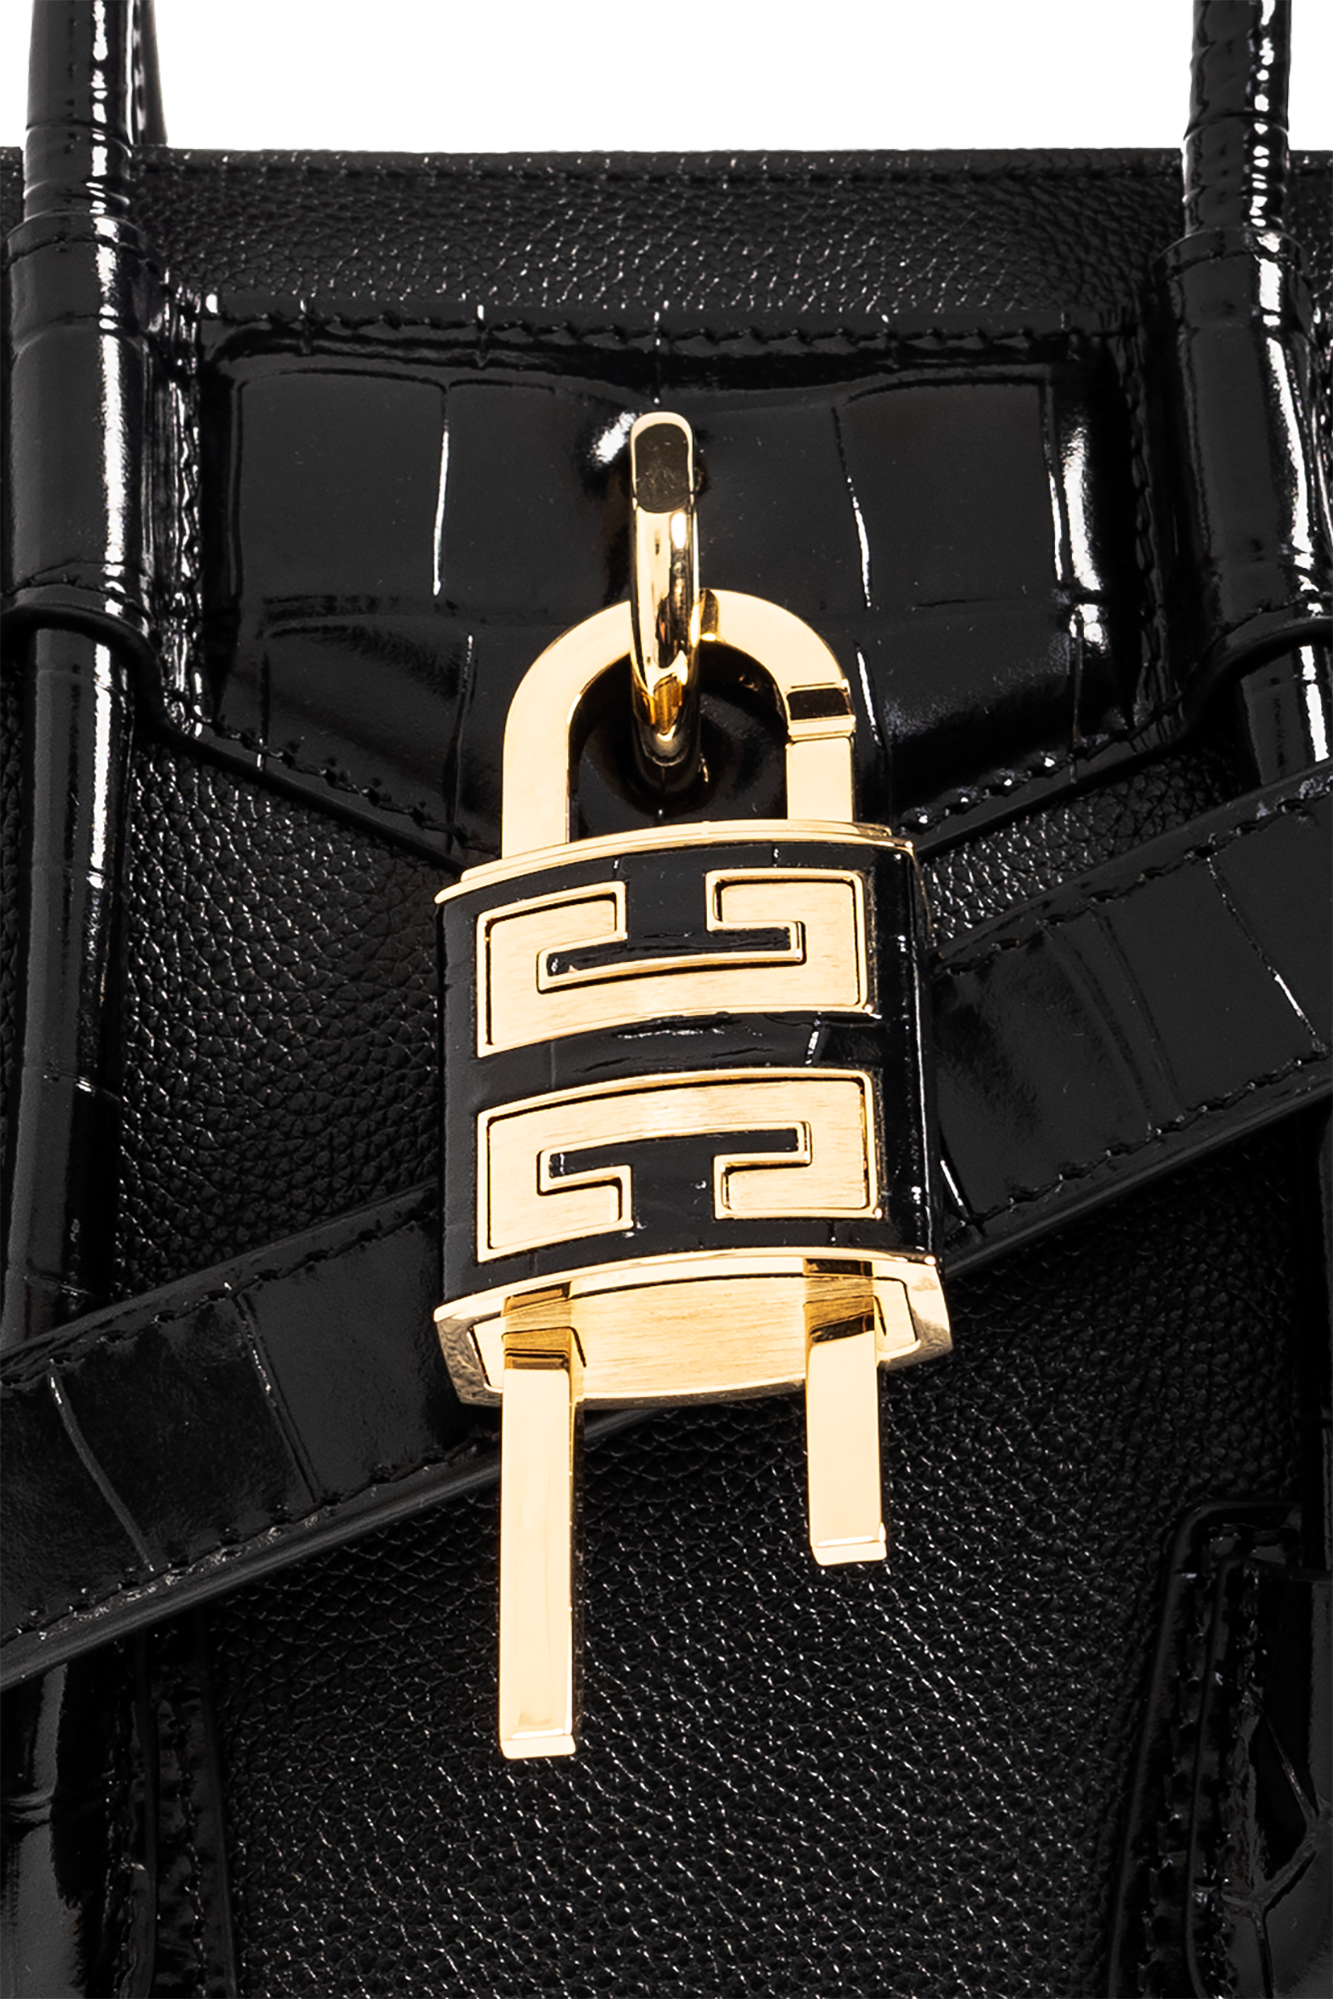 Givenchy ‘Antigona Lock Mini’ shoulder bag